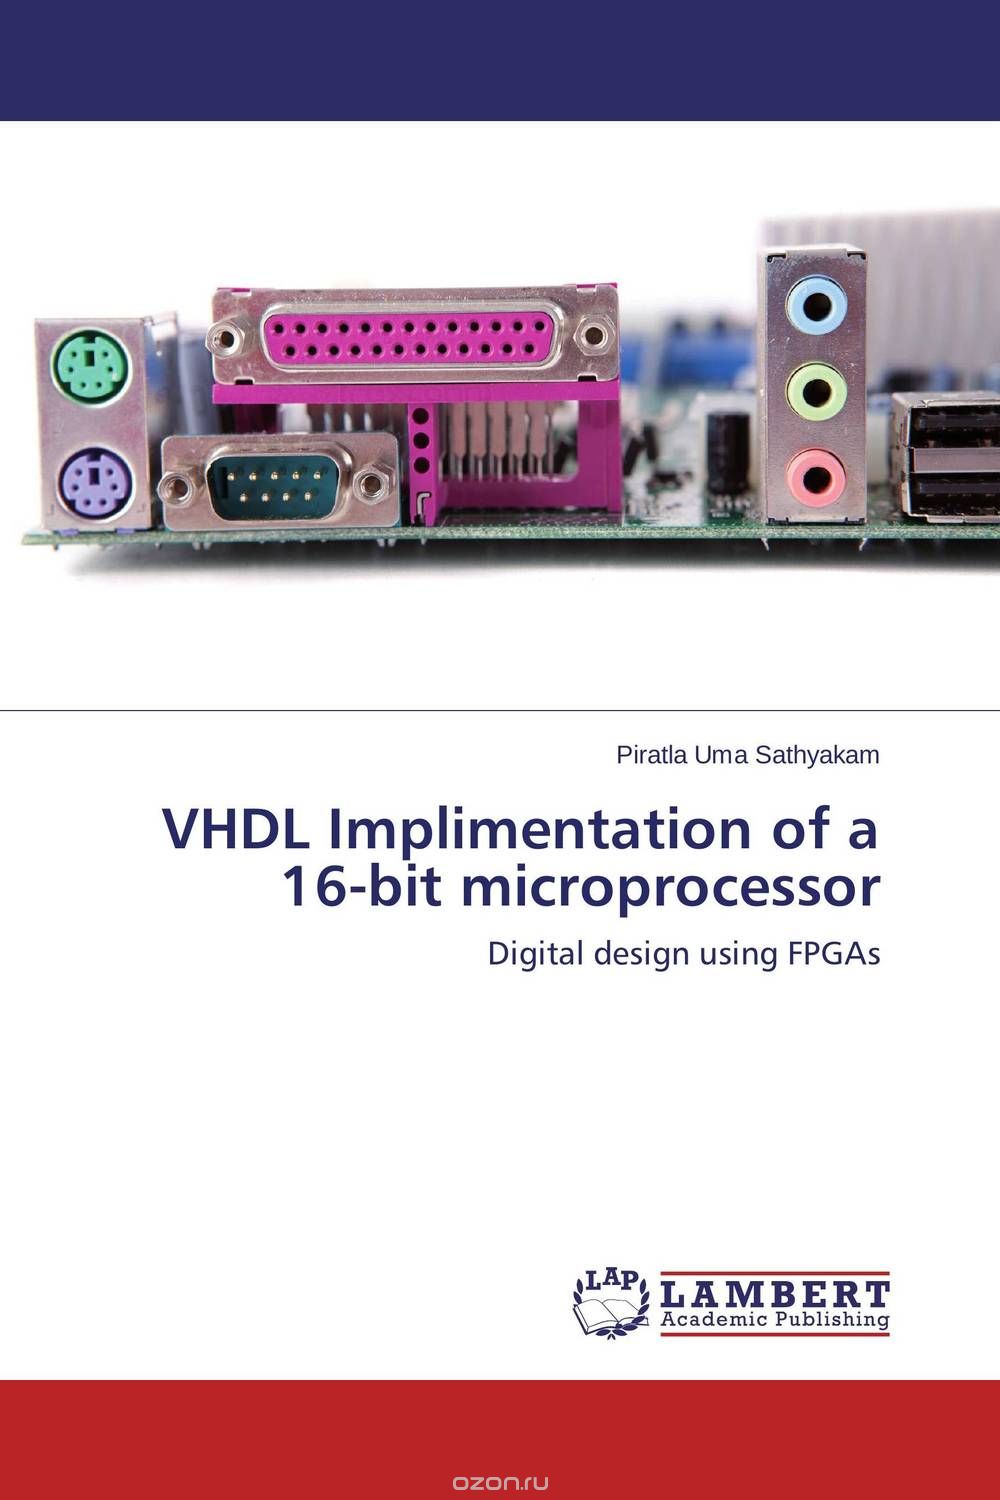 Скачать книгу "VHDL Implimentation of a 16-bit microprocessor"